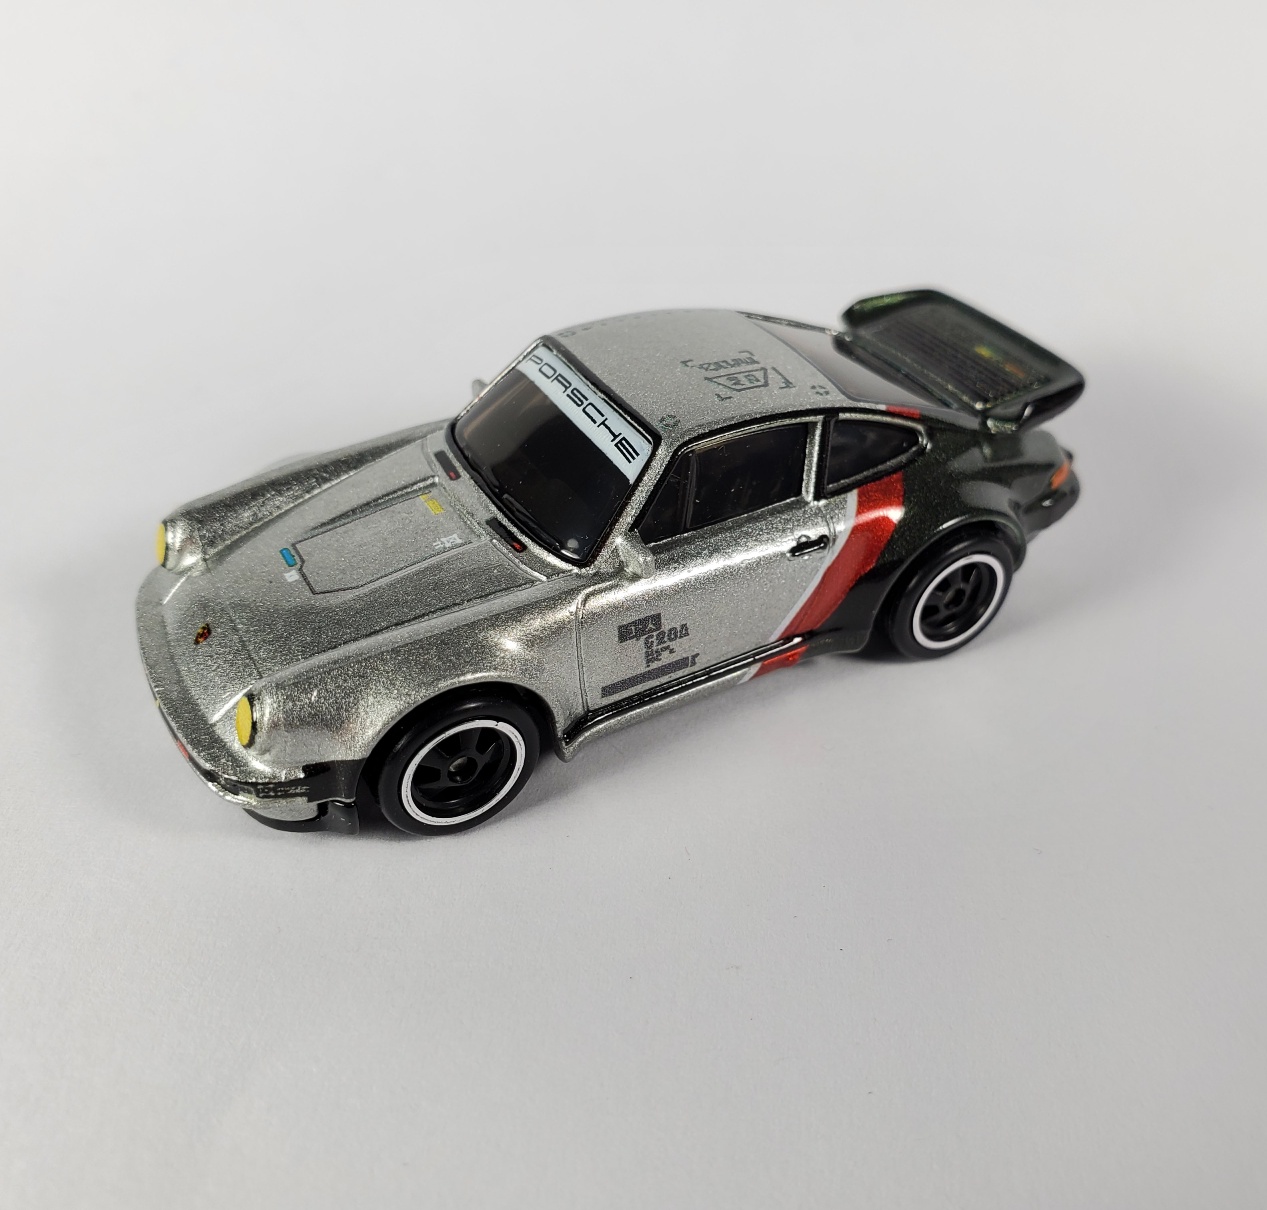 2023 Hot Wheels Cars PORSCHE 911 CARRERA RS 2.7 1/64 Metal Die-cast Model  Toy